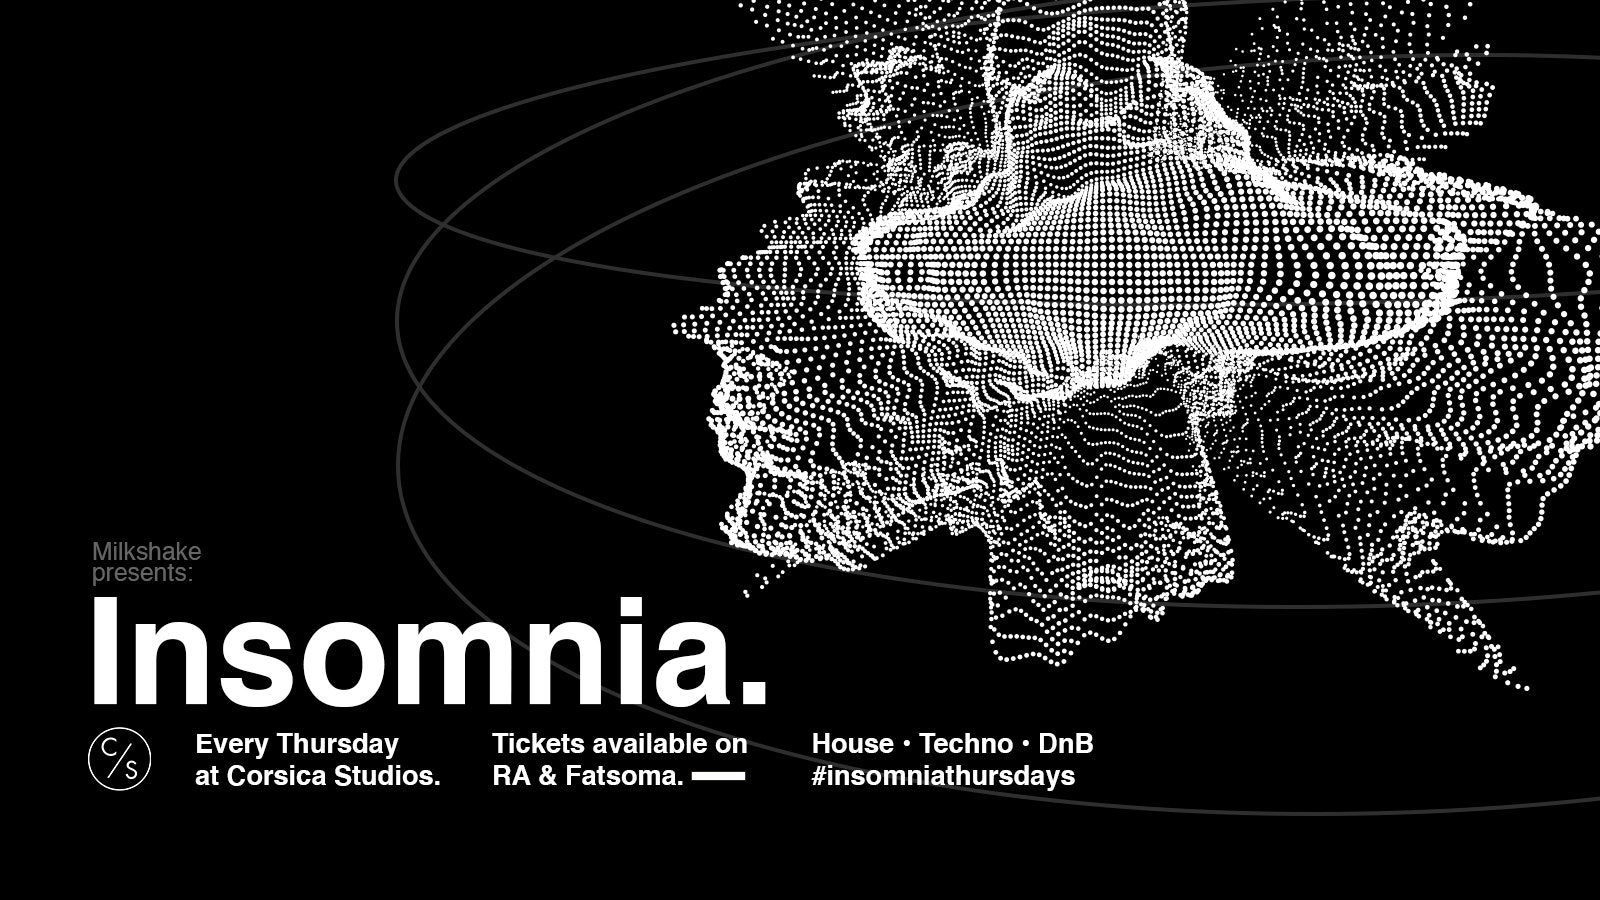 Insomnia London | House, Techno, DnB – £3 Tickets!